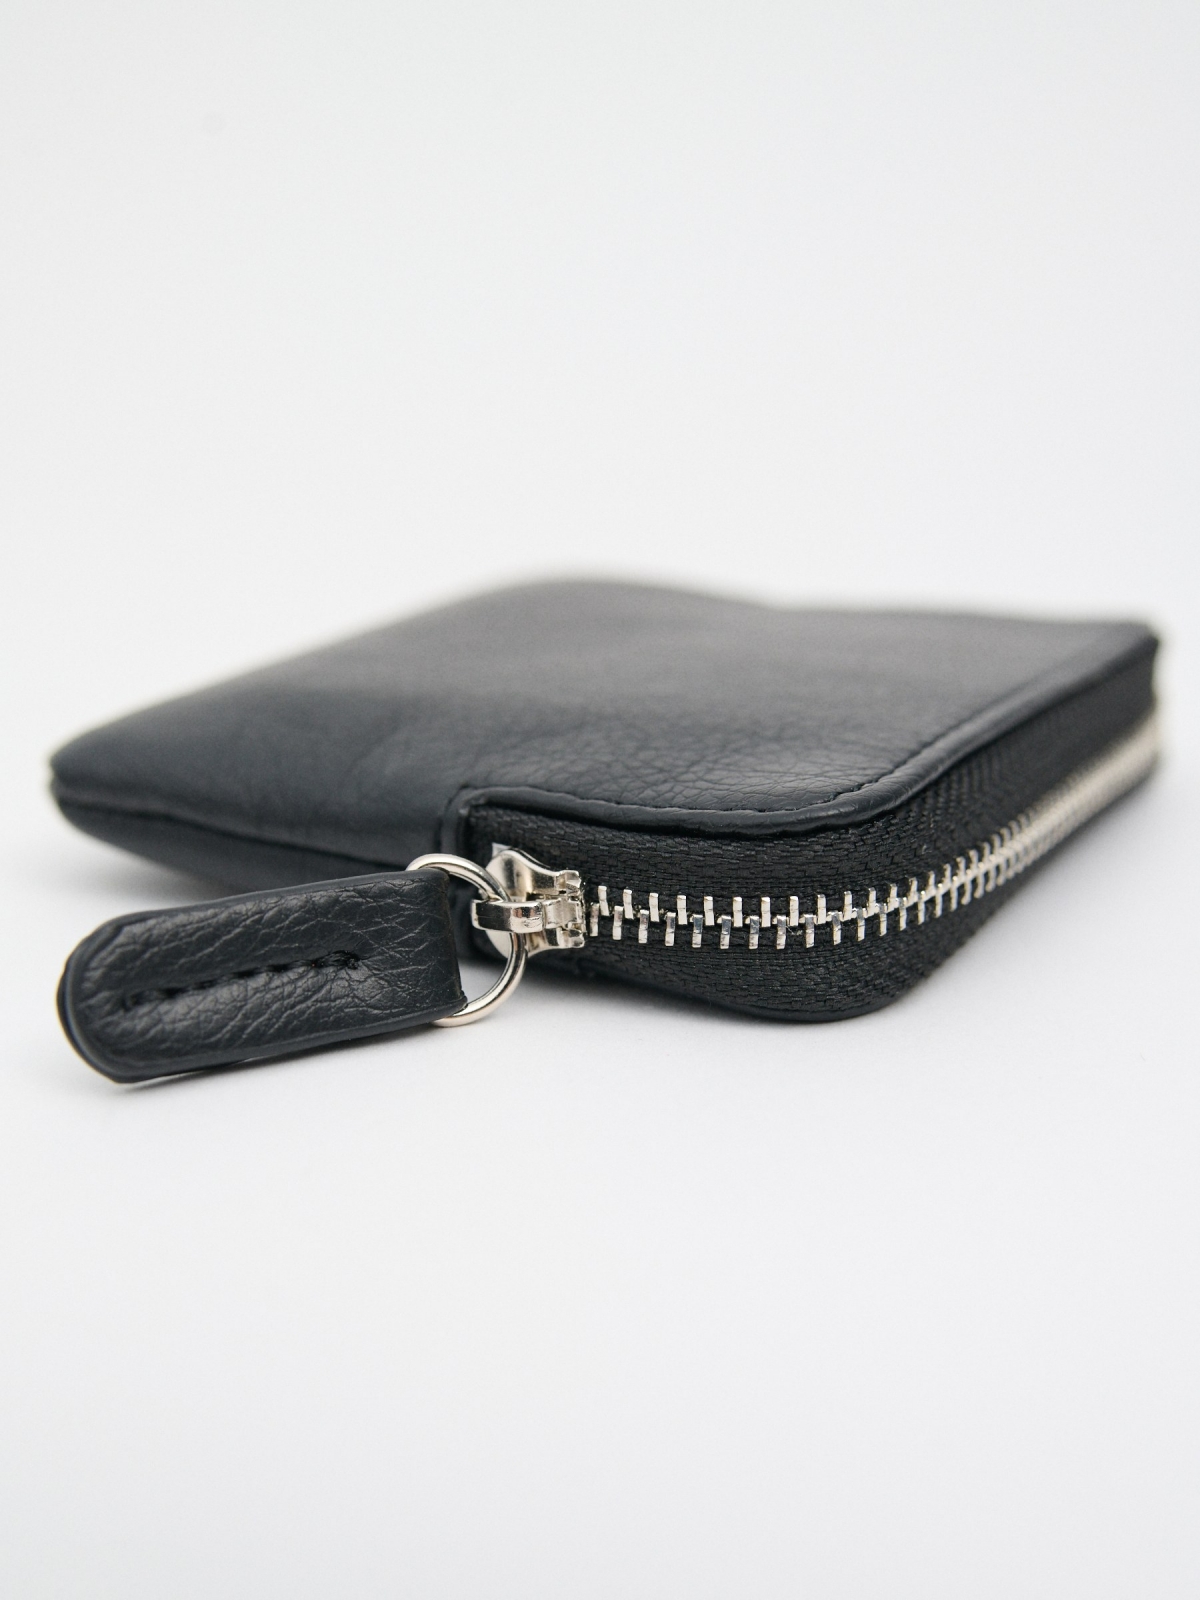 Black leather effect purse black back view